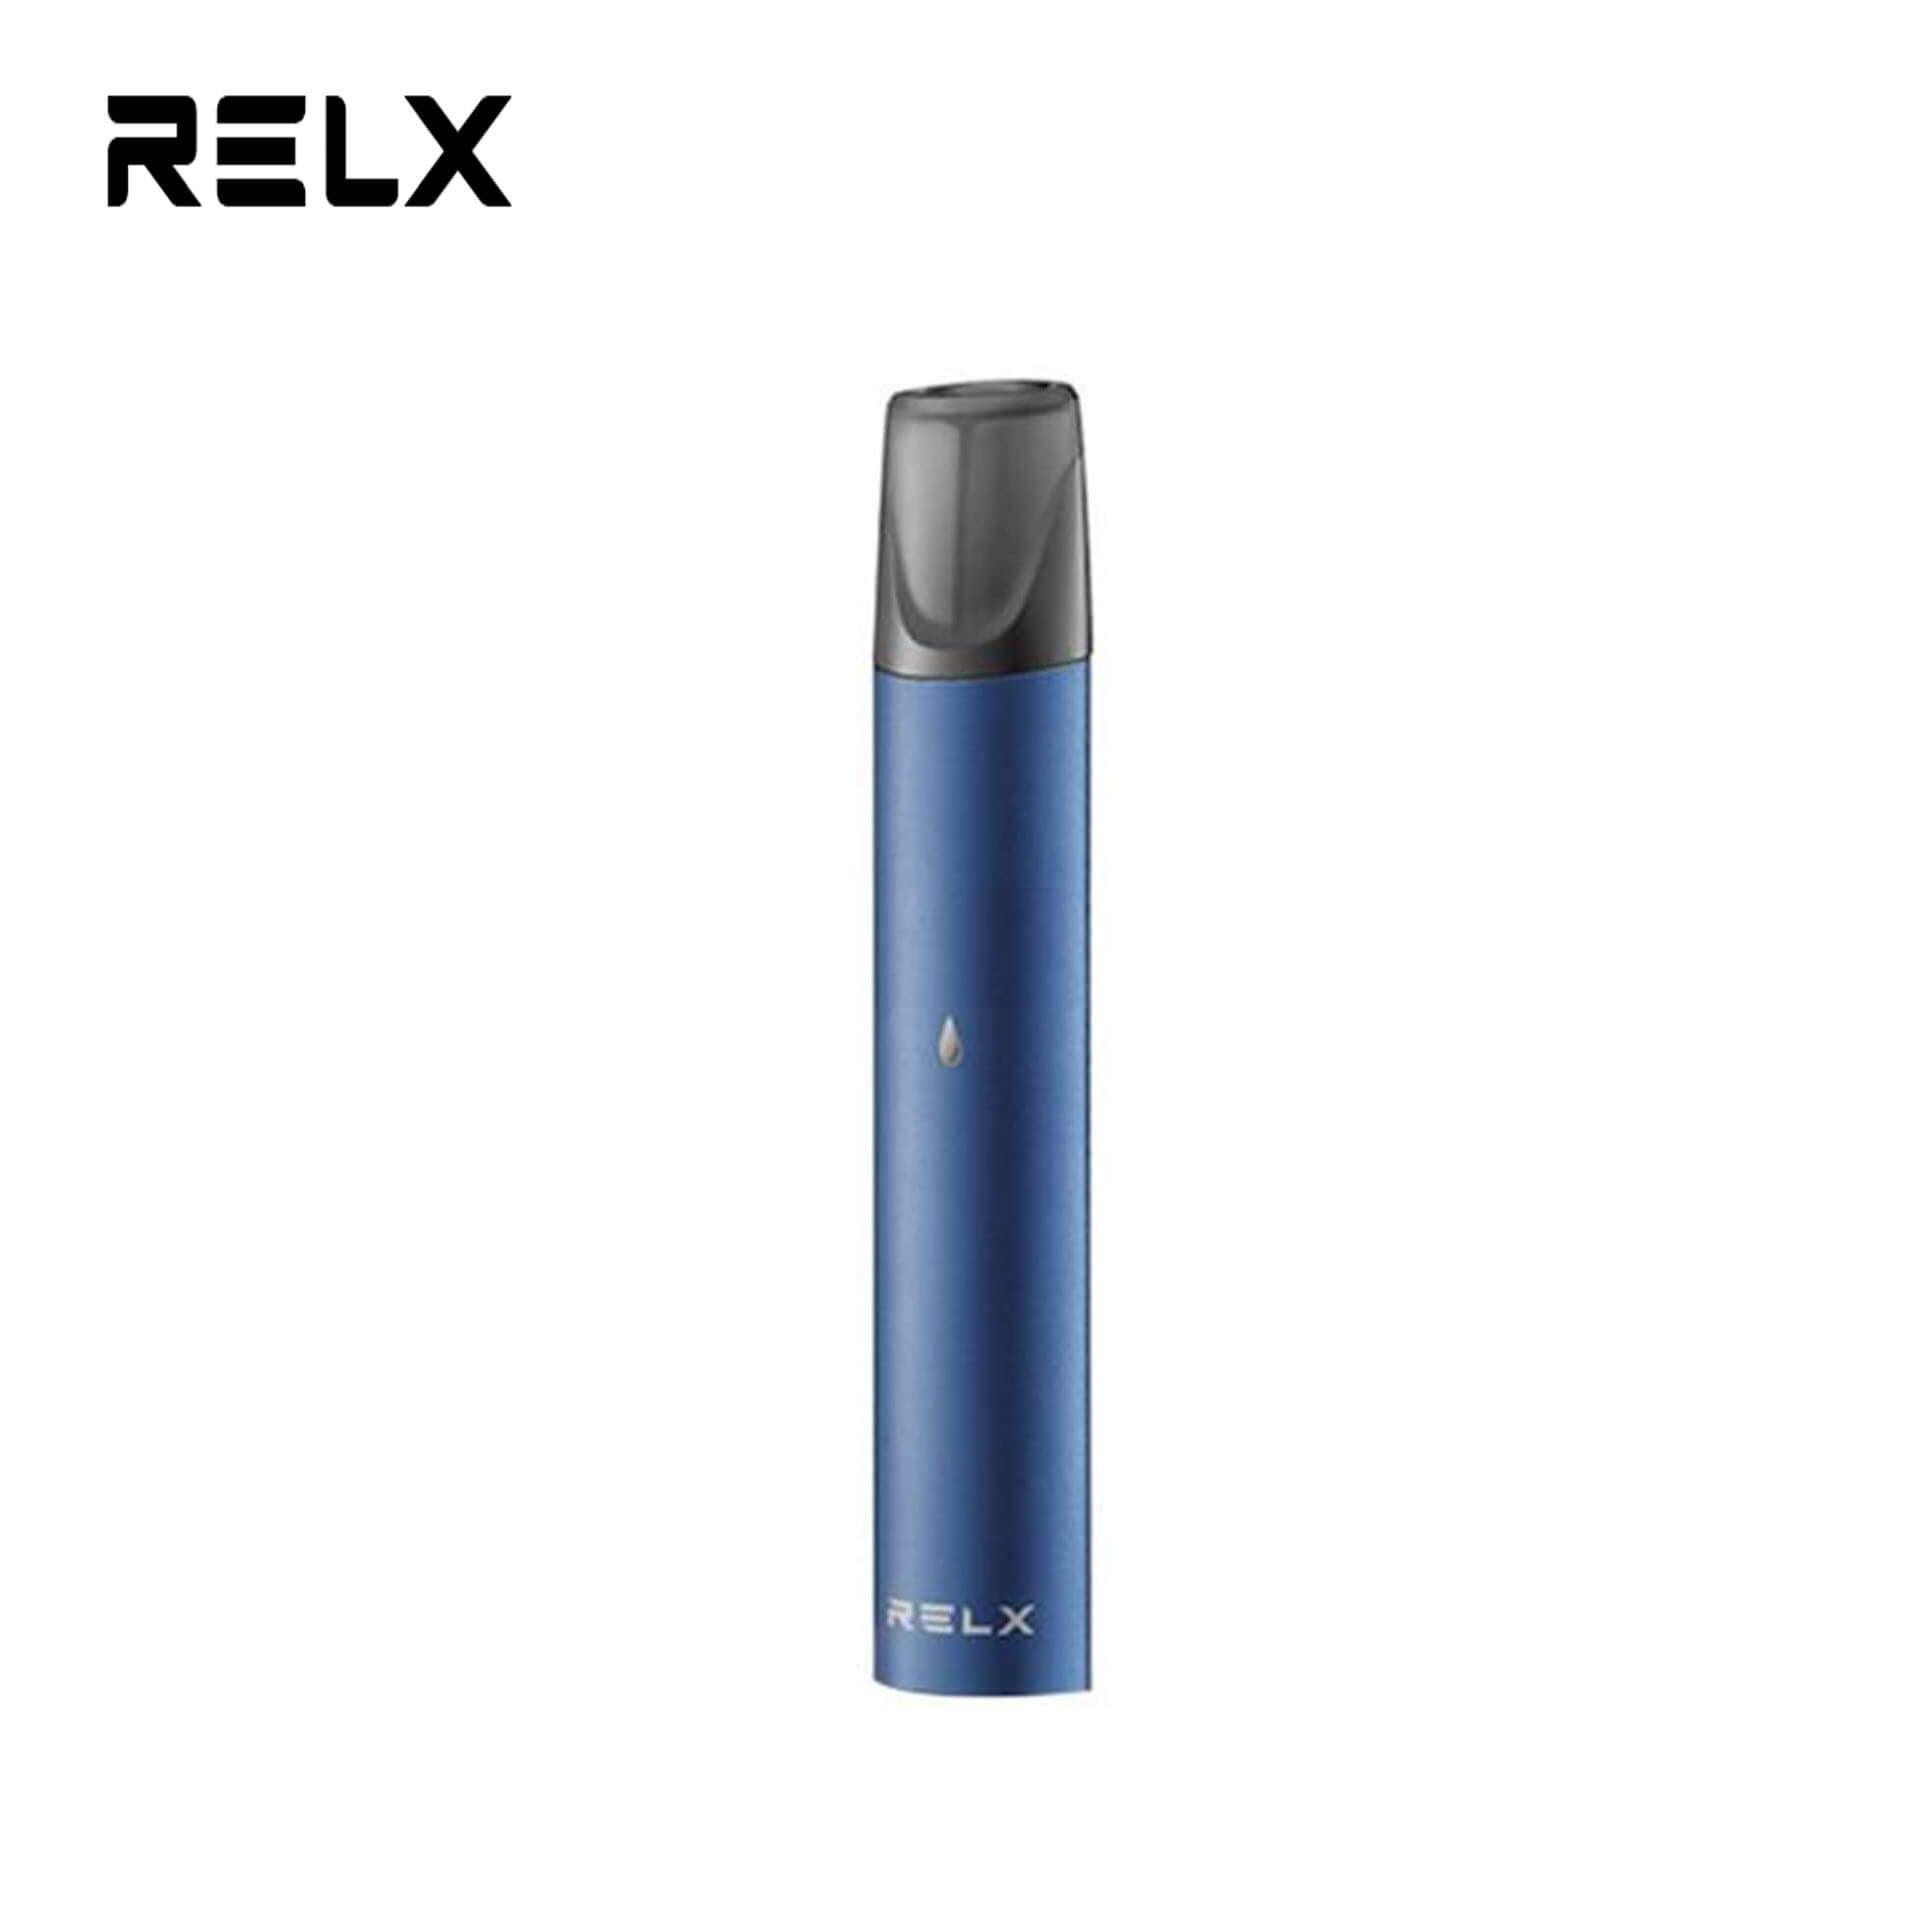 Relx Classic Device (Merlion Vape SG) - Blue - Merlion Vape SG